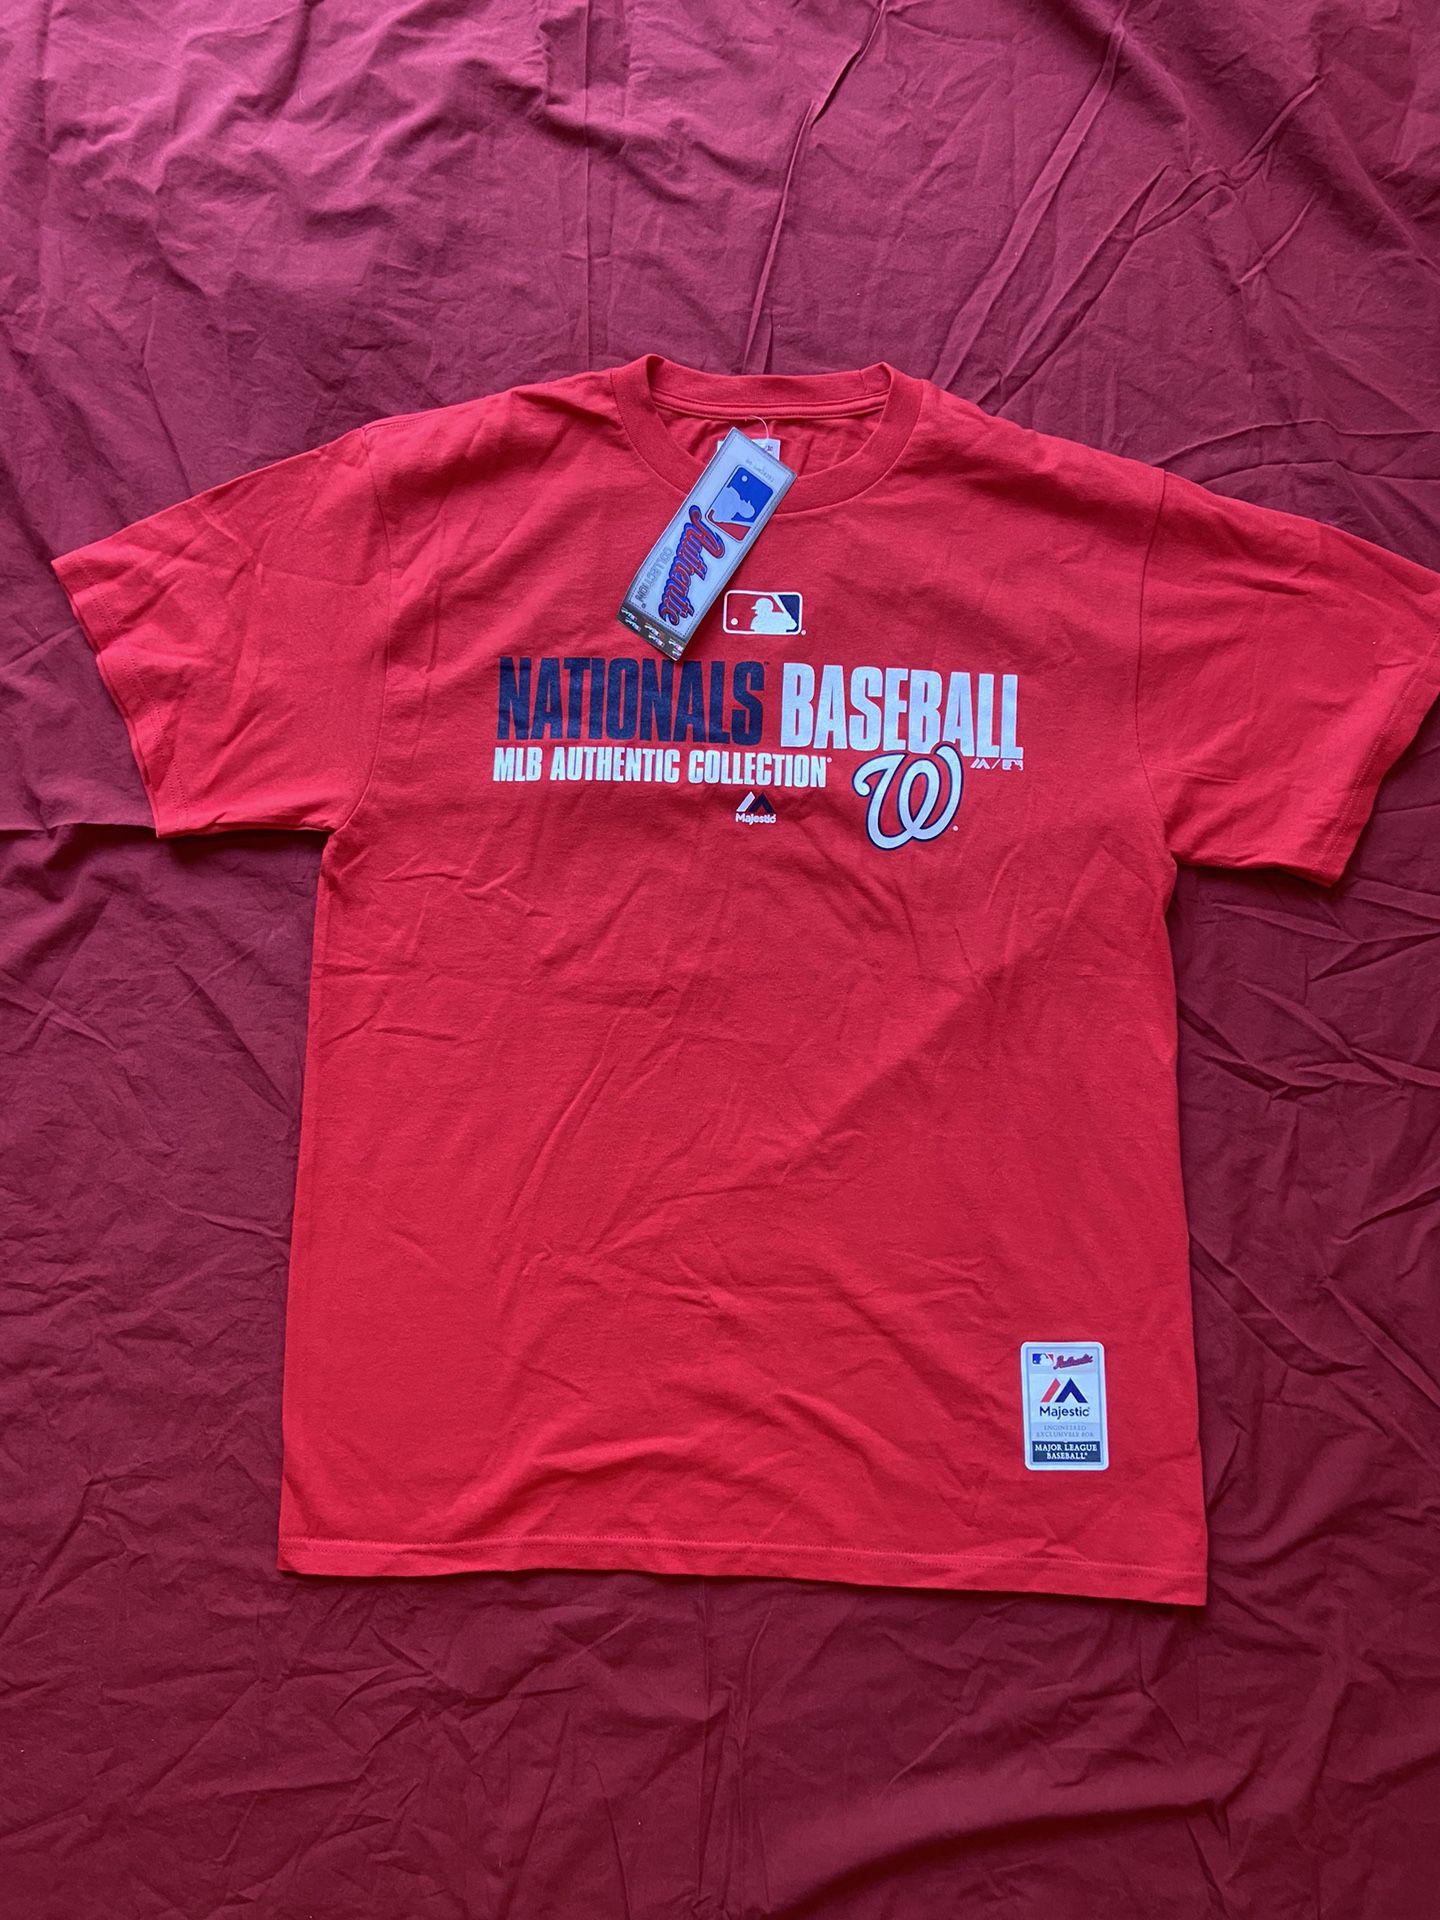 NEW Men's Washington Nationals T-Shirt Majestic Size Large Red